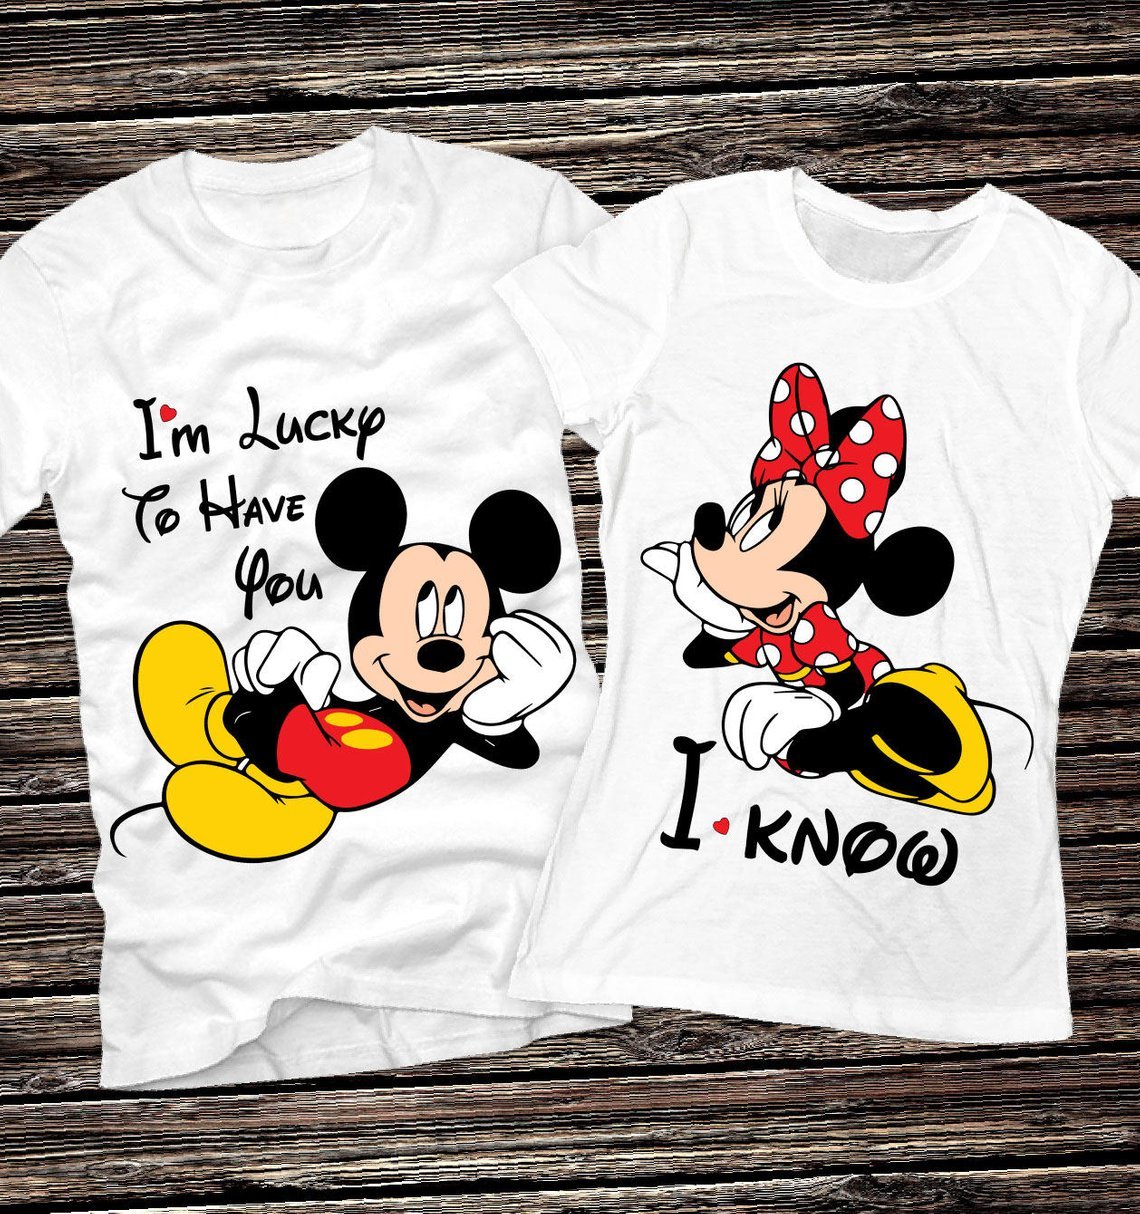 Disney Castle Shirt NH-DL Winnie The Pooh Shirt Disney Couple Shirt Honeymoon Shirt Piglet Pooh Shirt Mickey Balloon Shirt